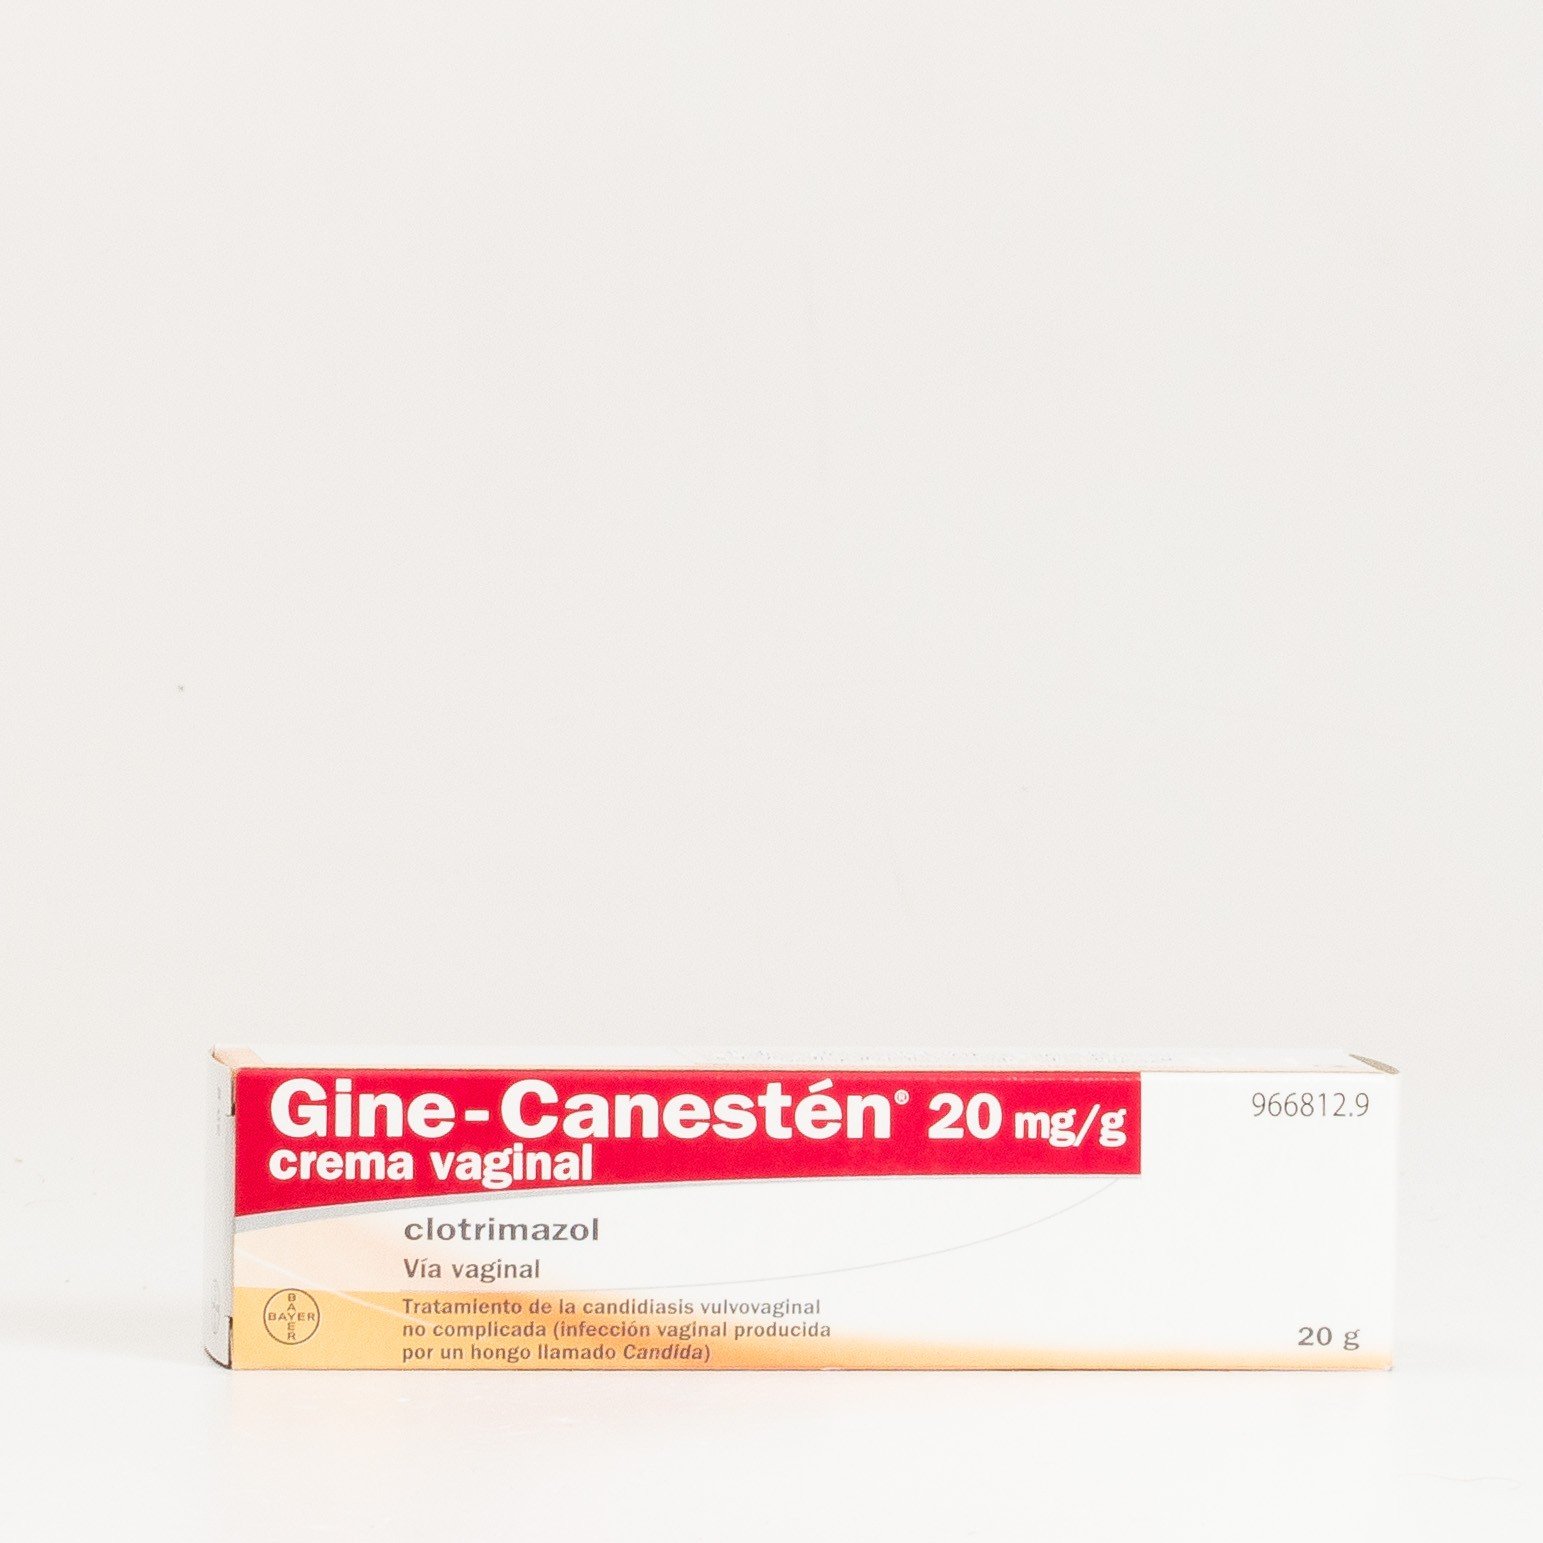 Gine-Canestén 20 mg/g crema vaginal